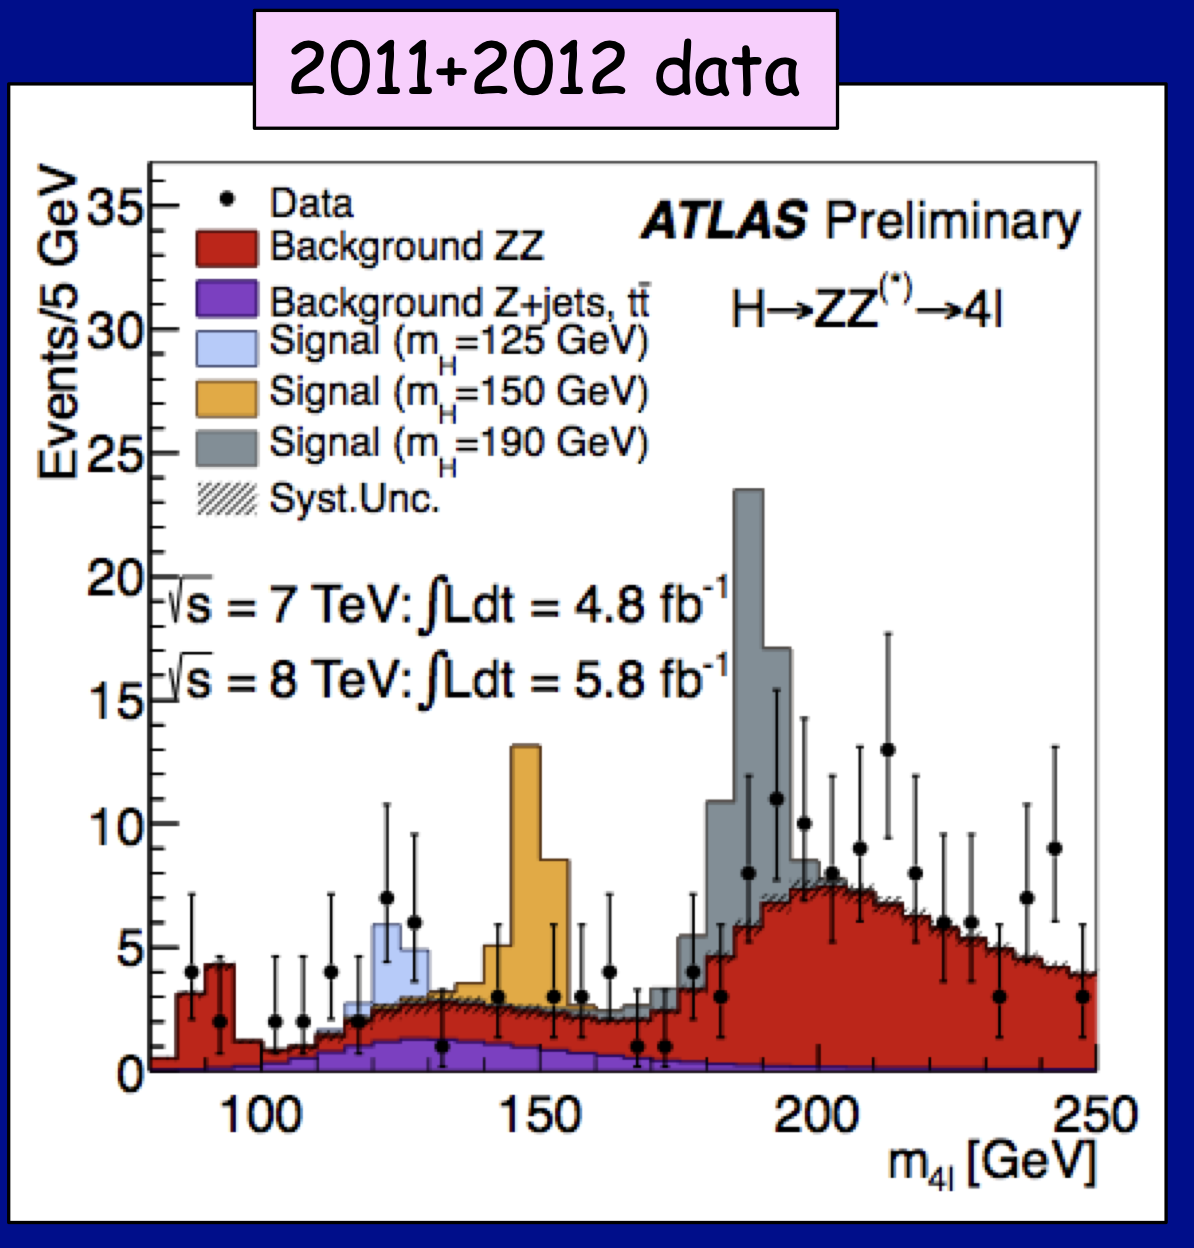 _images/atlas-higgs-2012.png